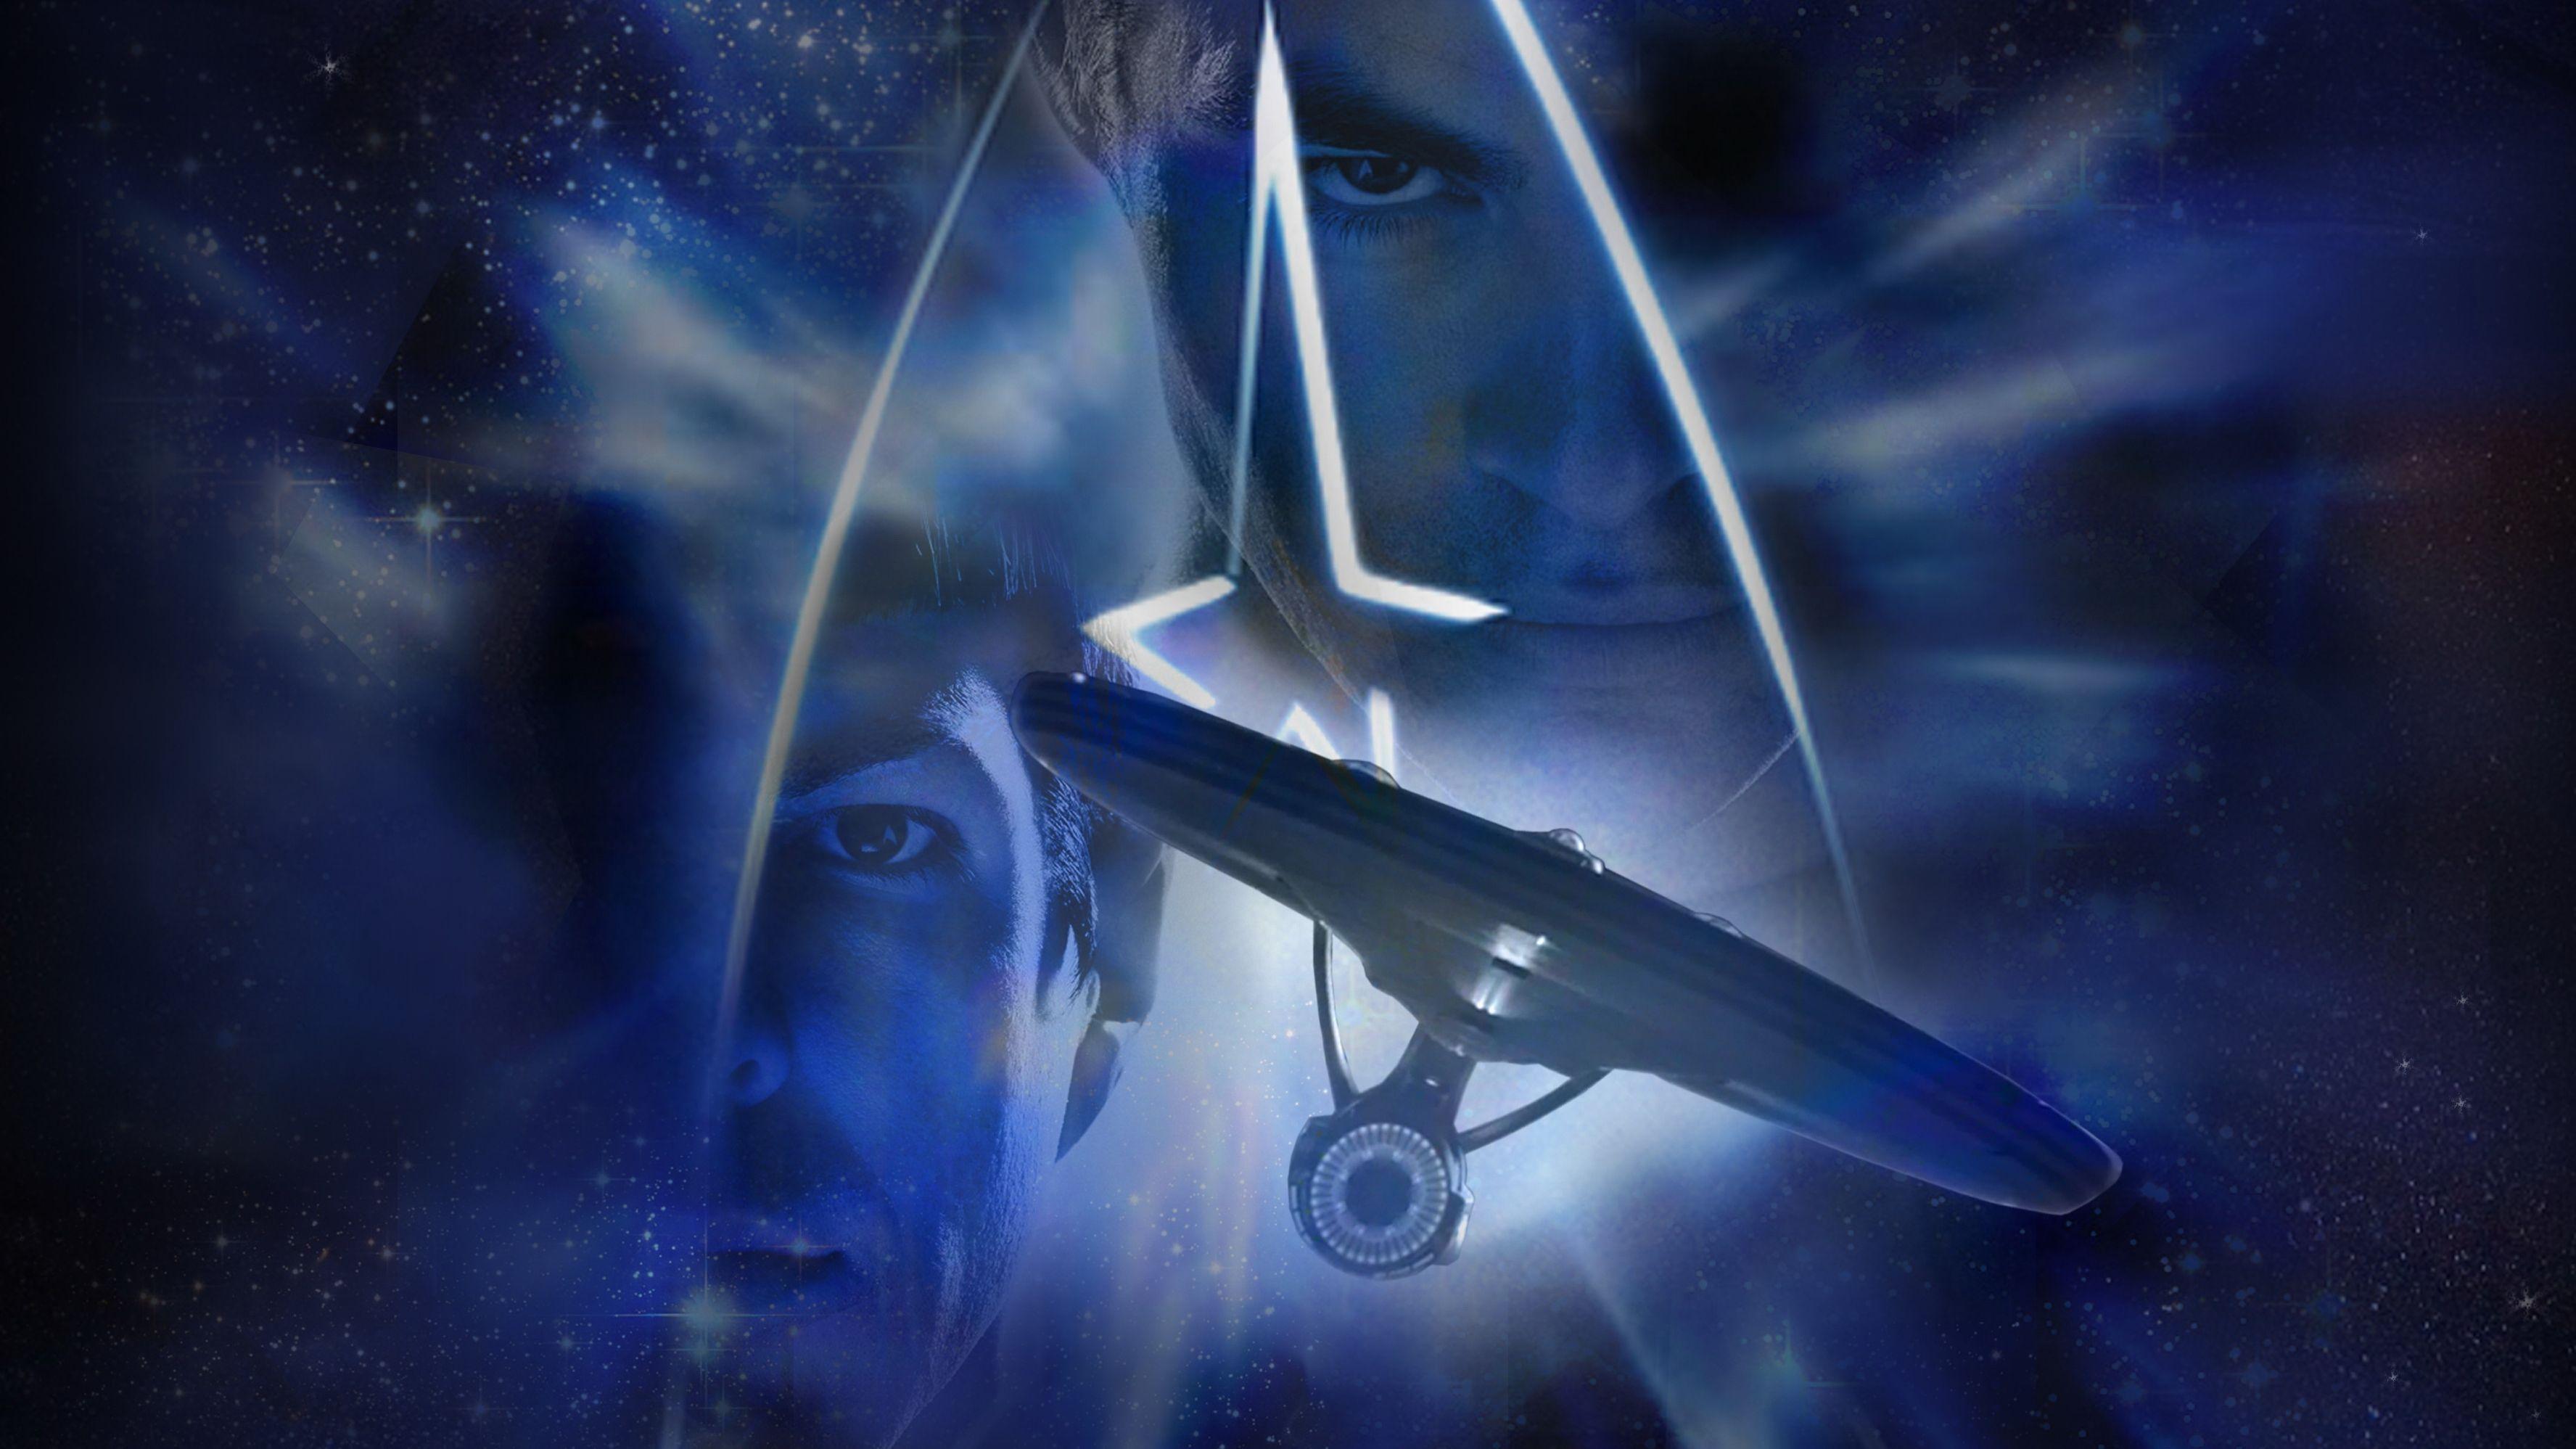 Star Trek Into Darkness HD Wallpaper